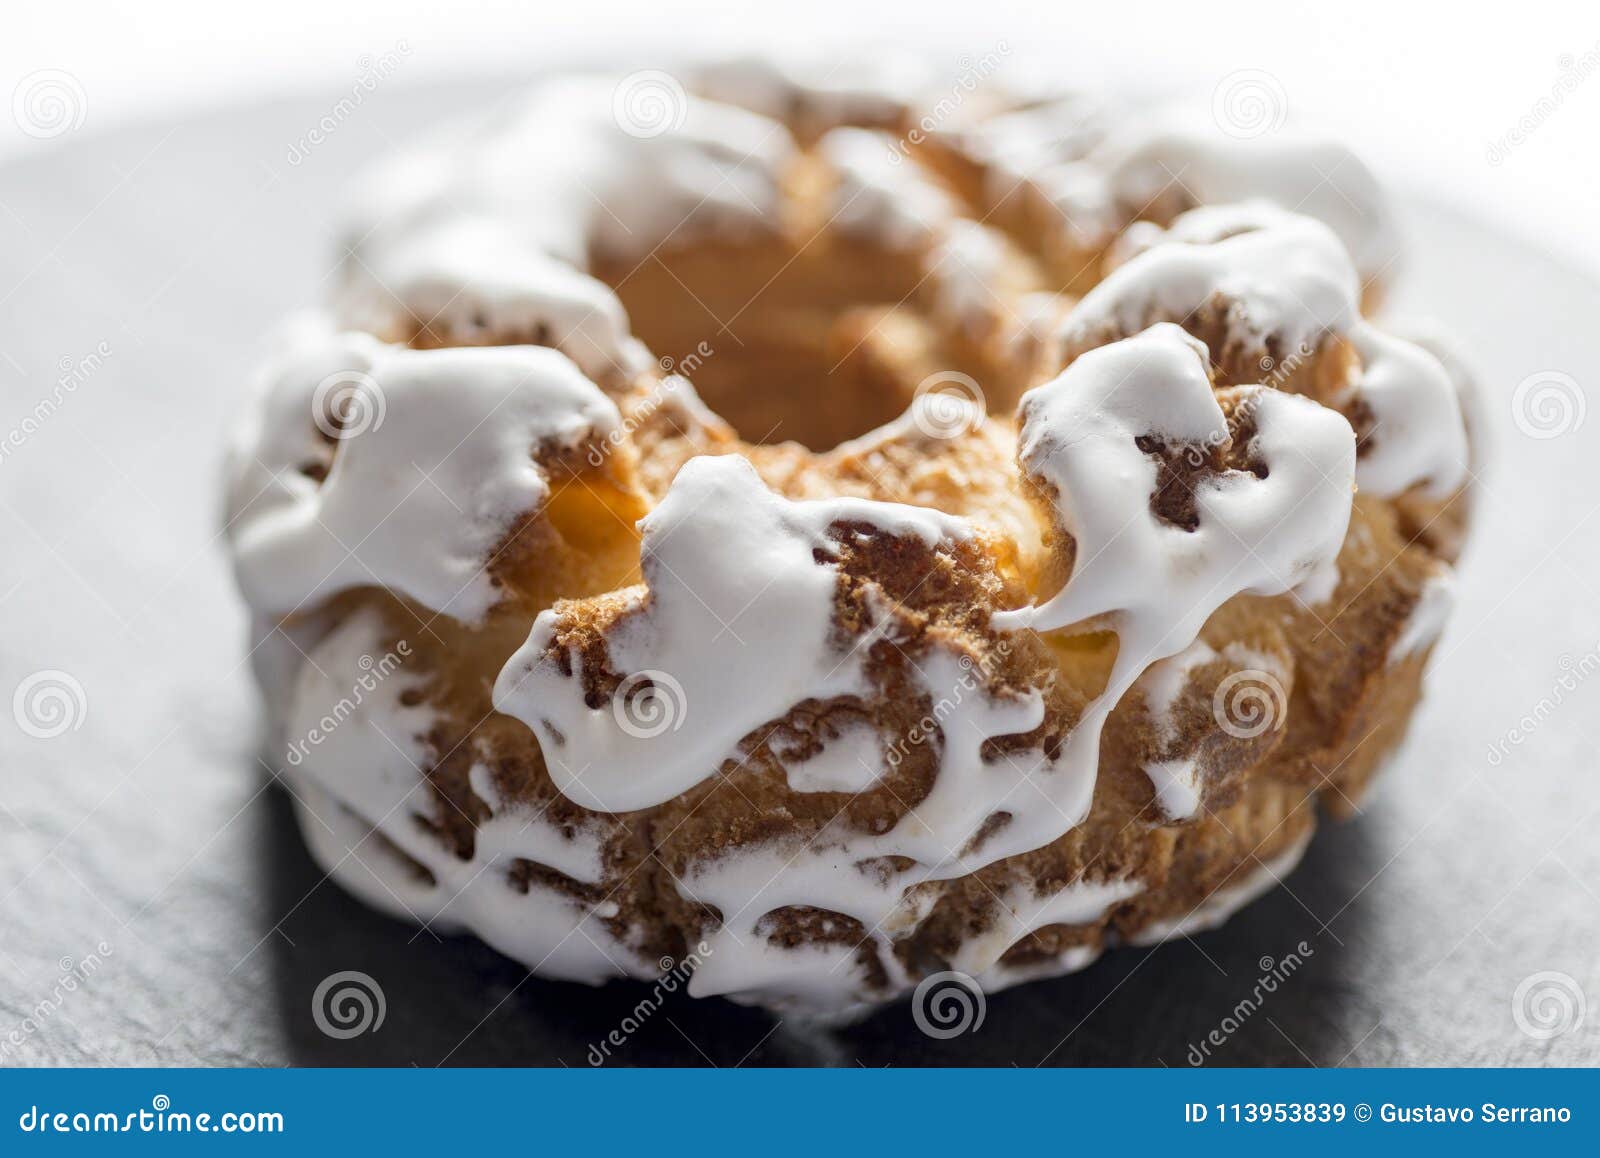 spanish homemade sugar donut dessert